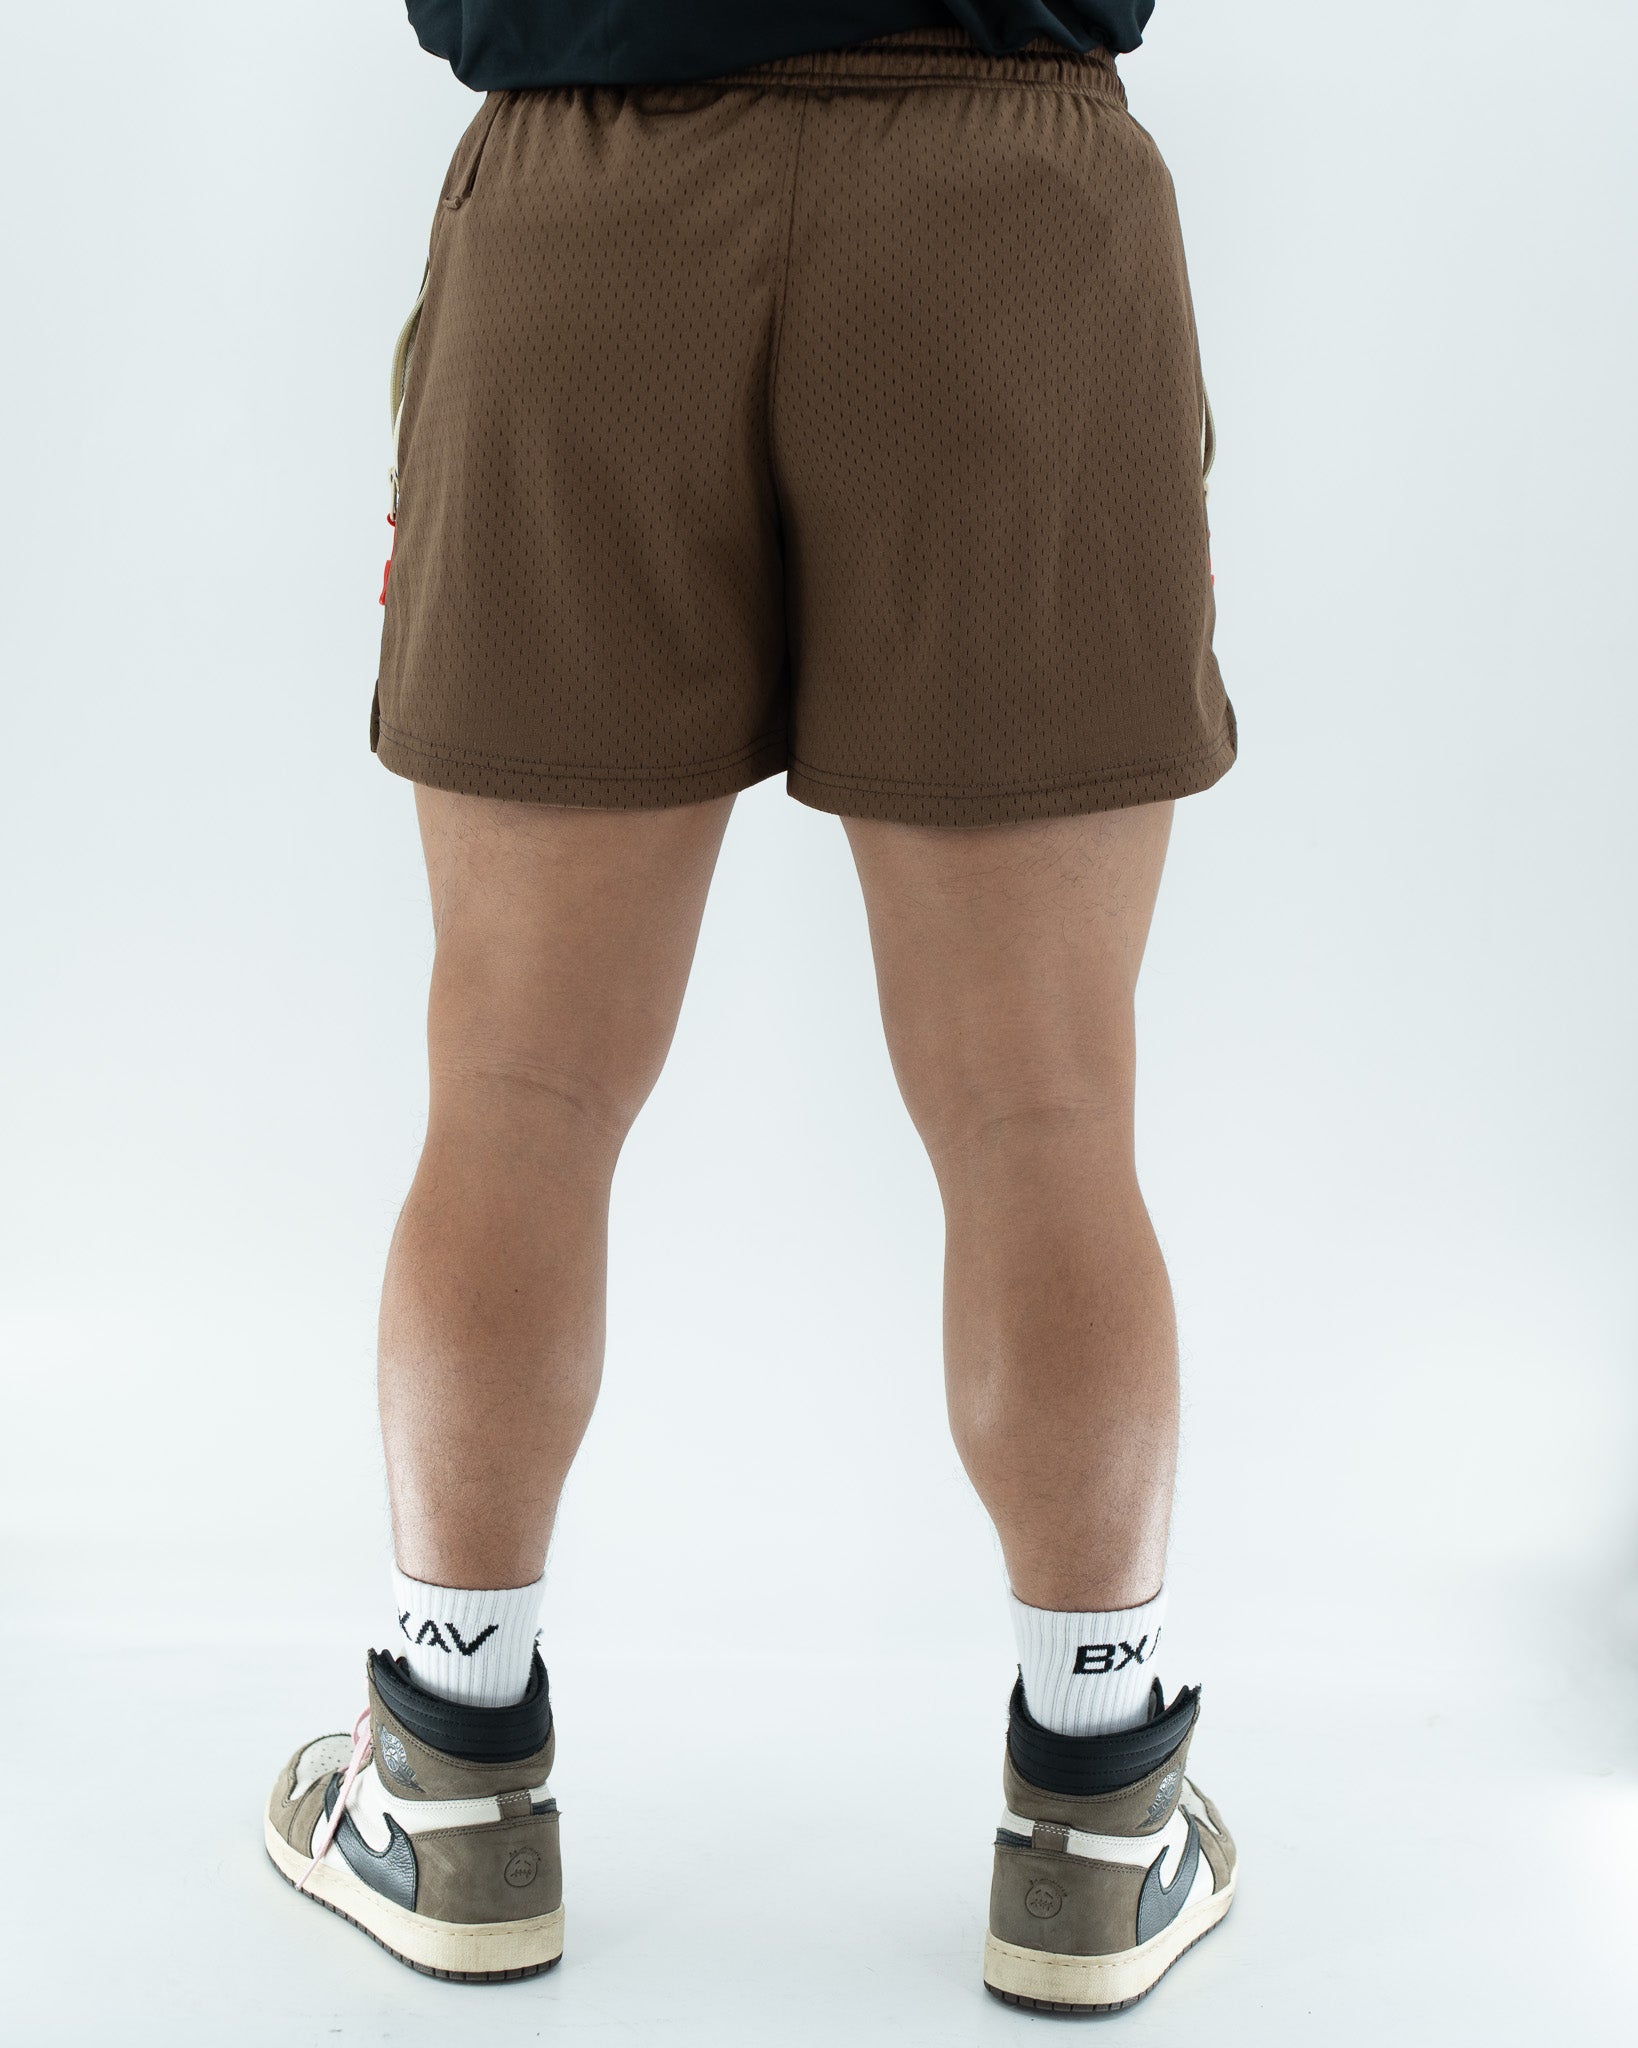 Unit 002 Mesh Shorts 4.5